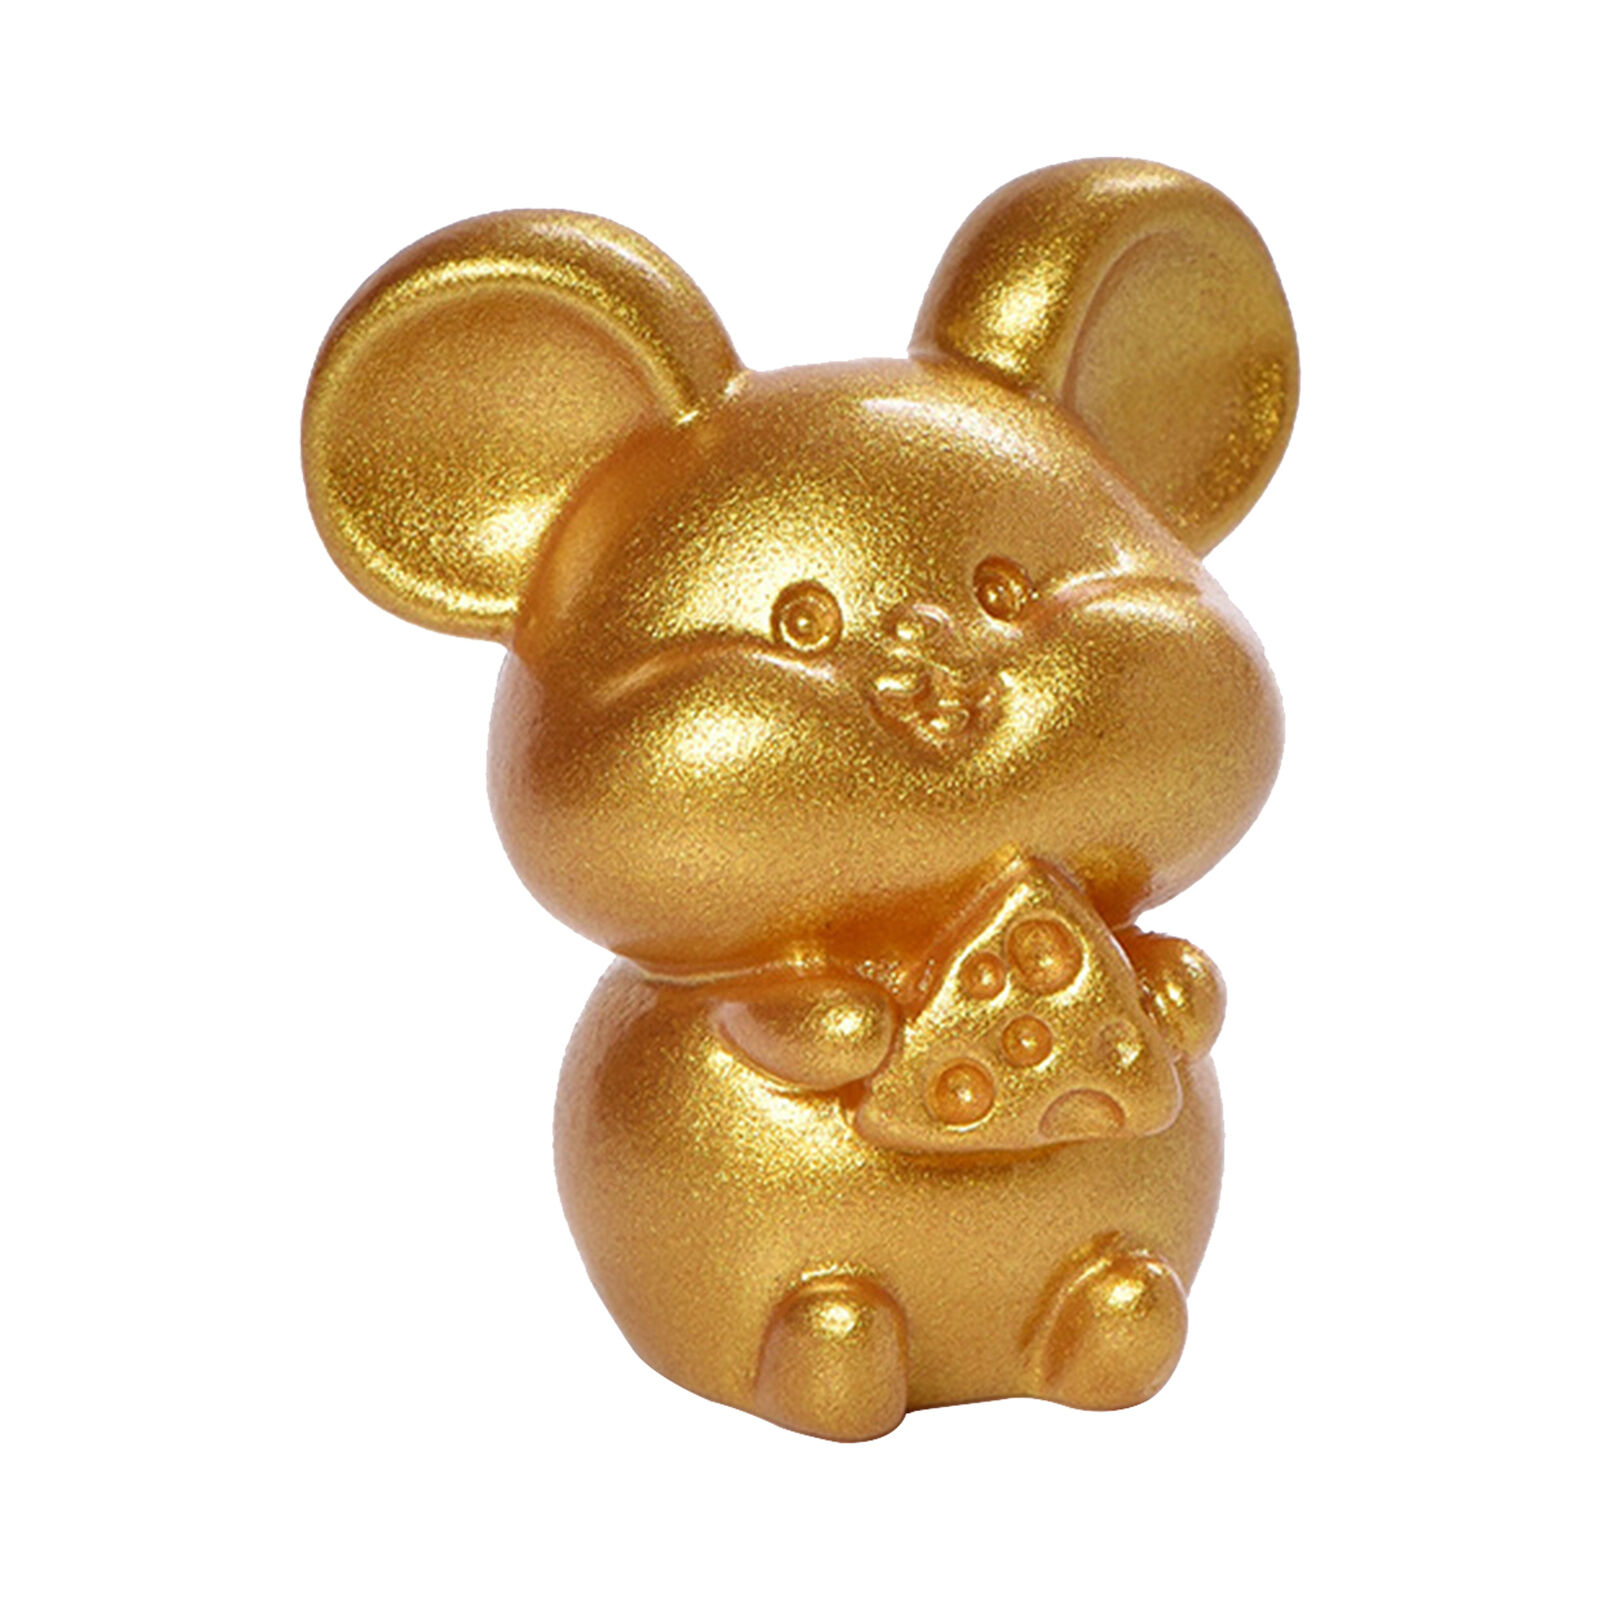 Zodiac Figurines Golden Resin Miniature Animals Sculpture Lucky Home Decoration 